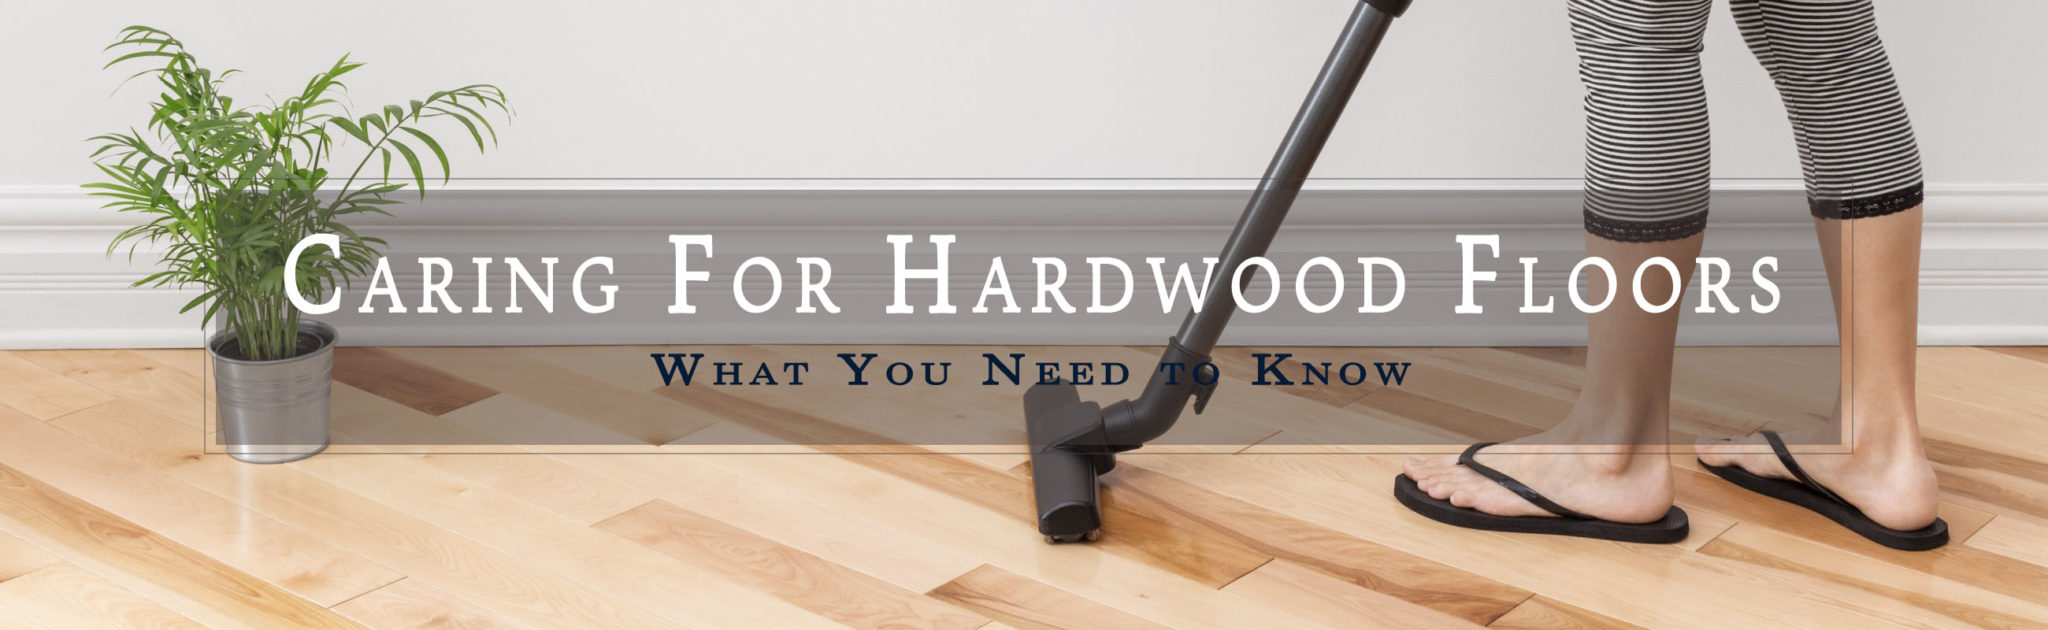 Caring For Hardwood Floors